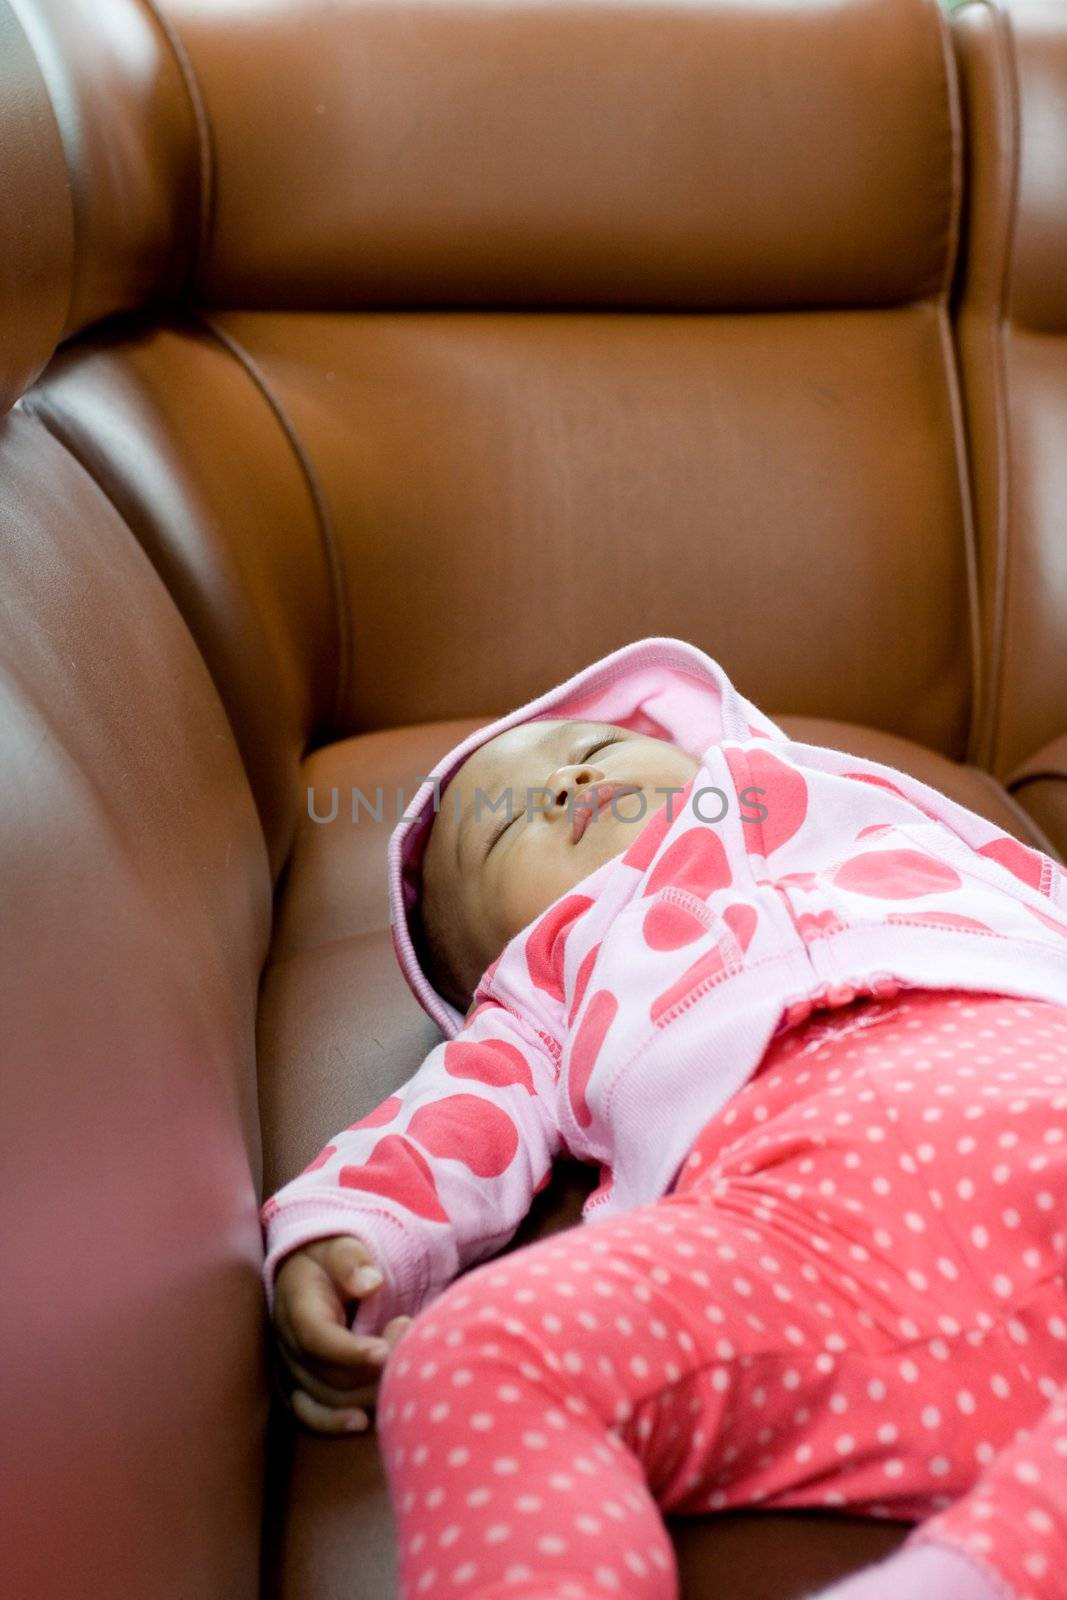 photo of a baby fall a sleep on the sofa at a restaurant